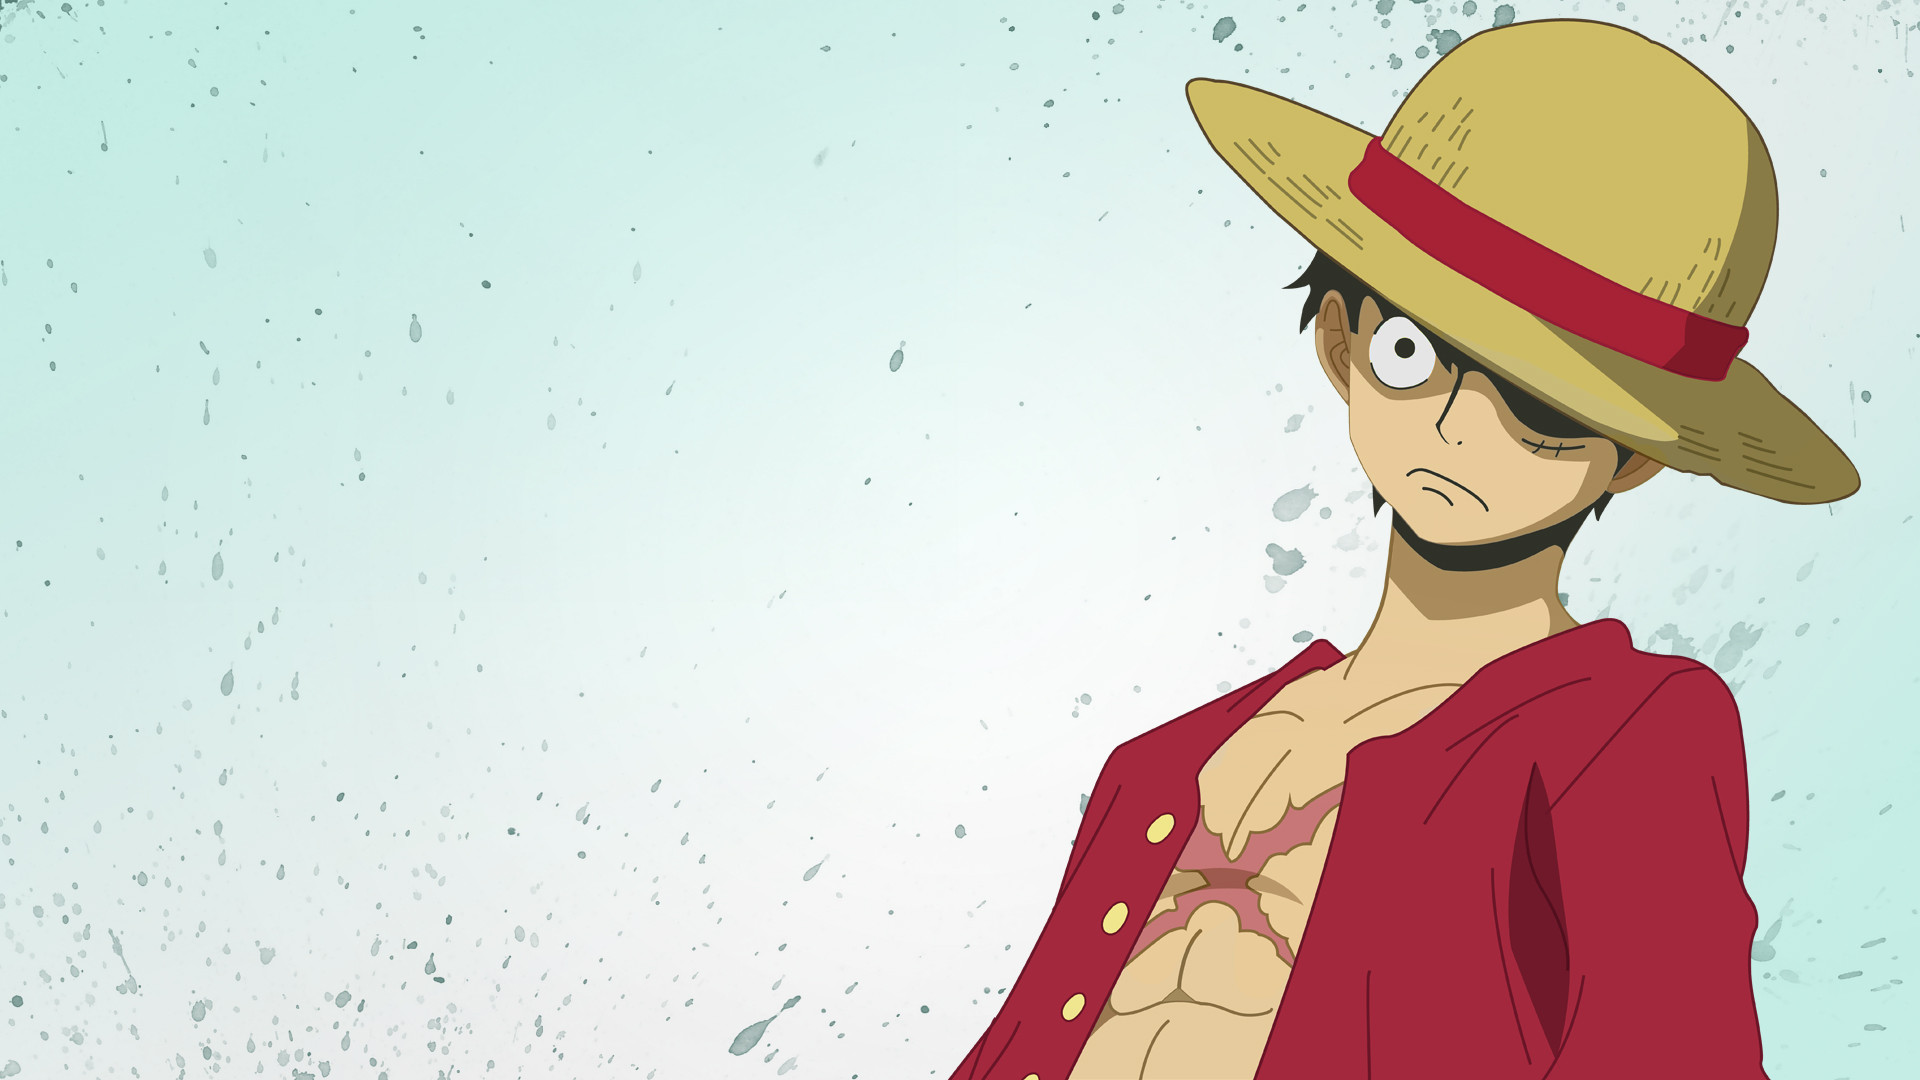 [Avatar & Signature] One Piece - Graphics and Animation Forum